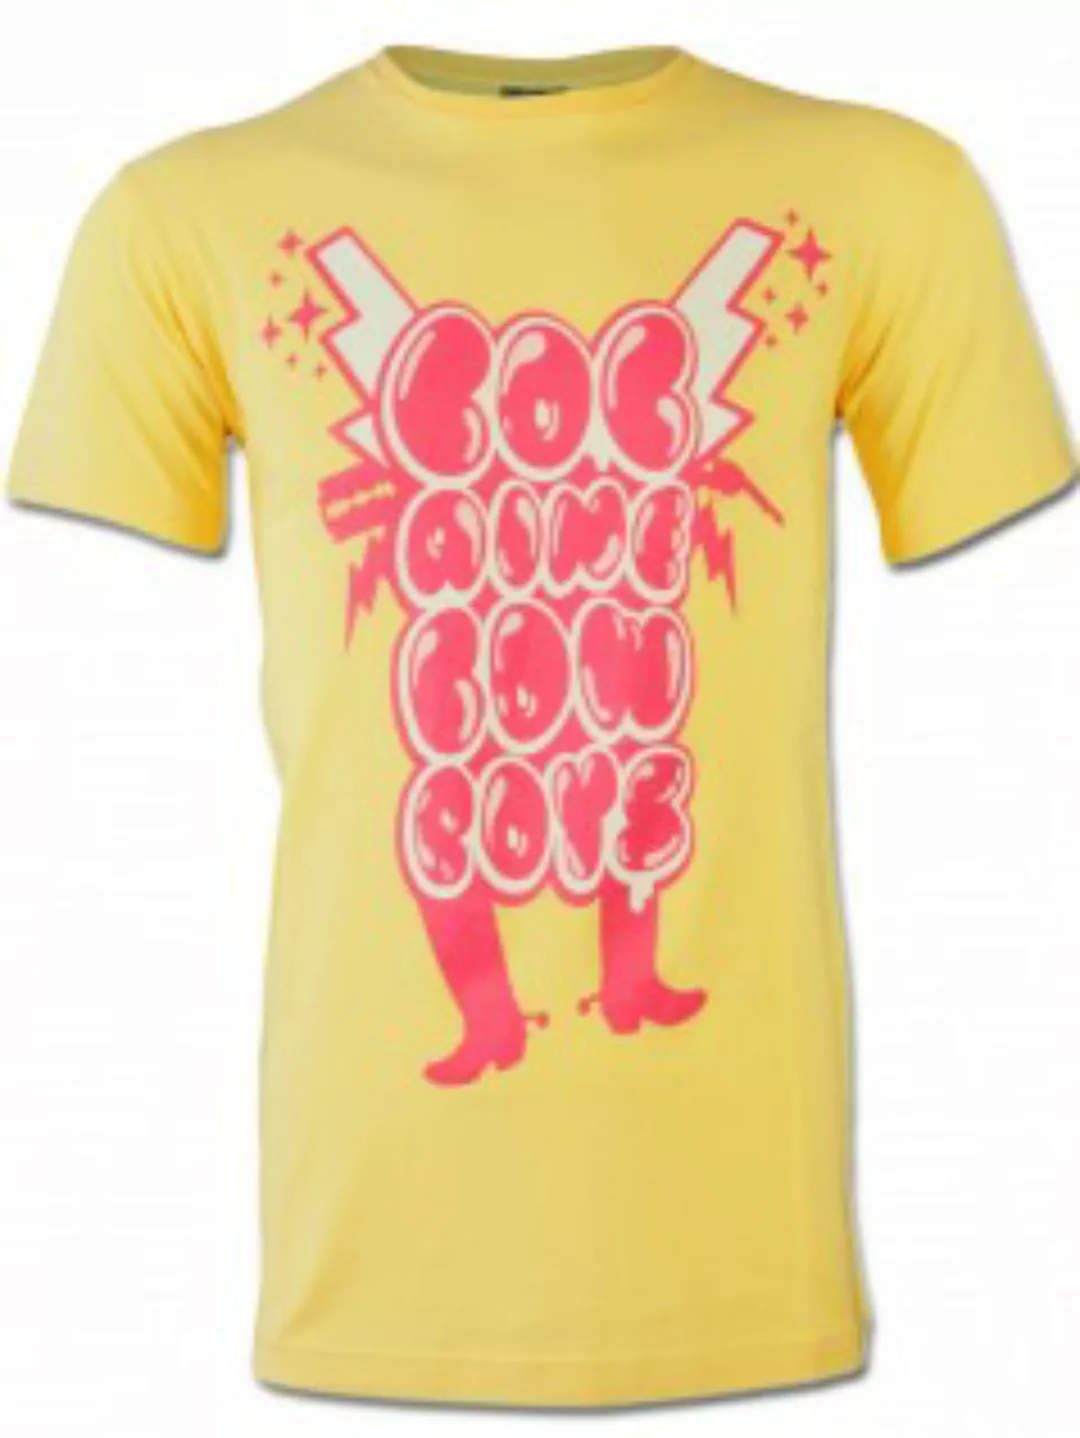 Cocaine Cowboys Herren Shirt Bubble Gum Cokeboy günstig online kaufen